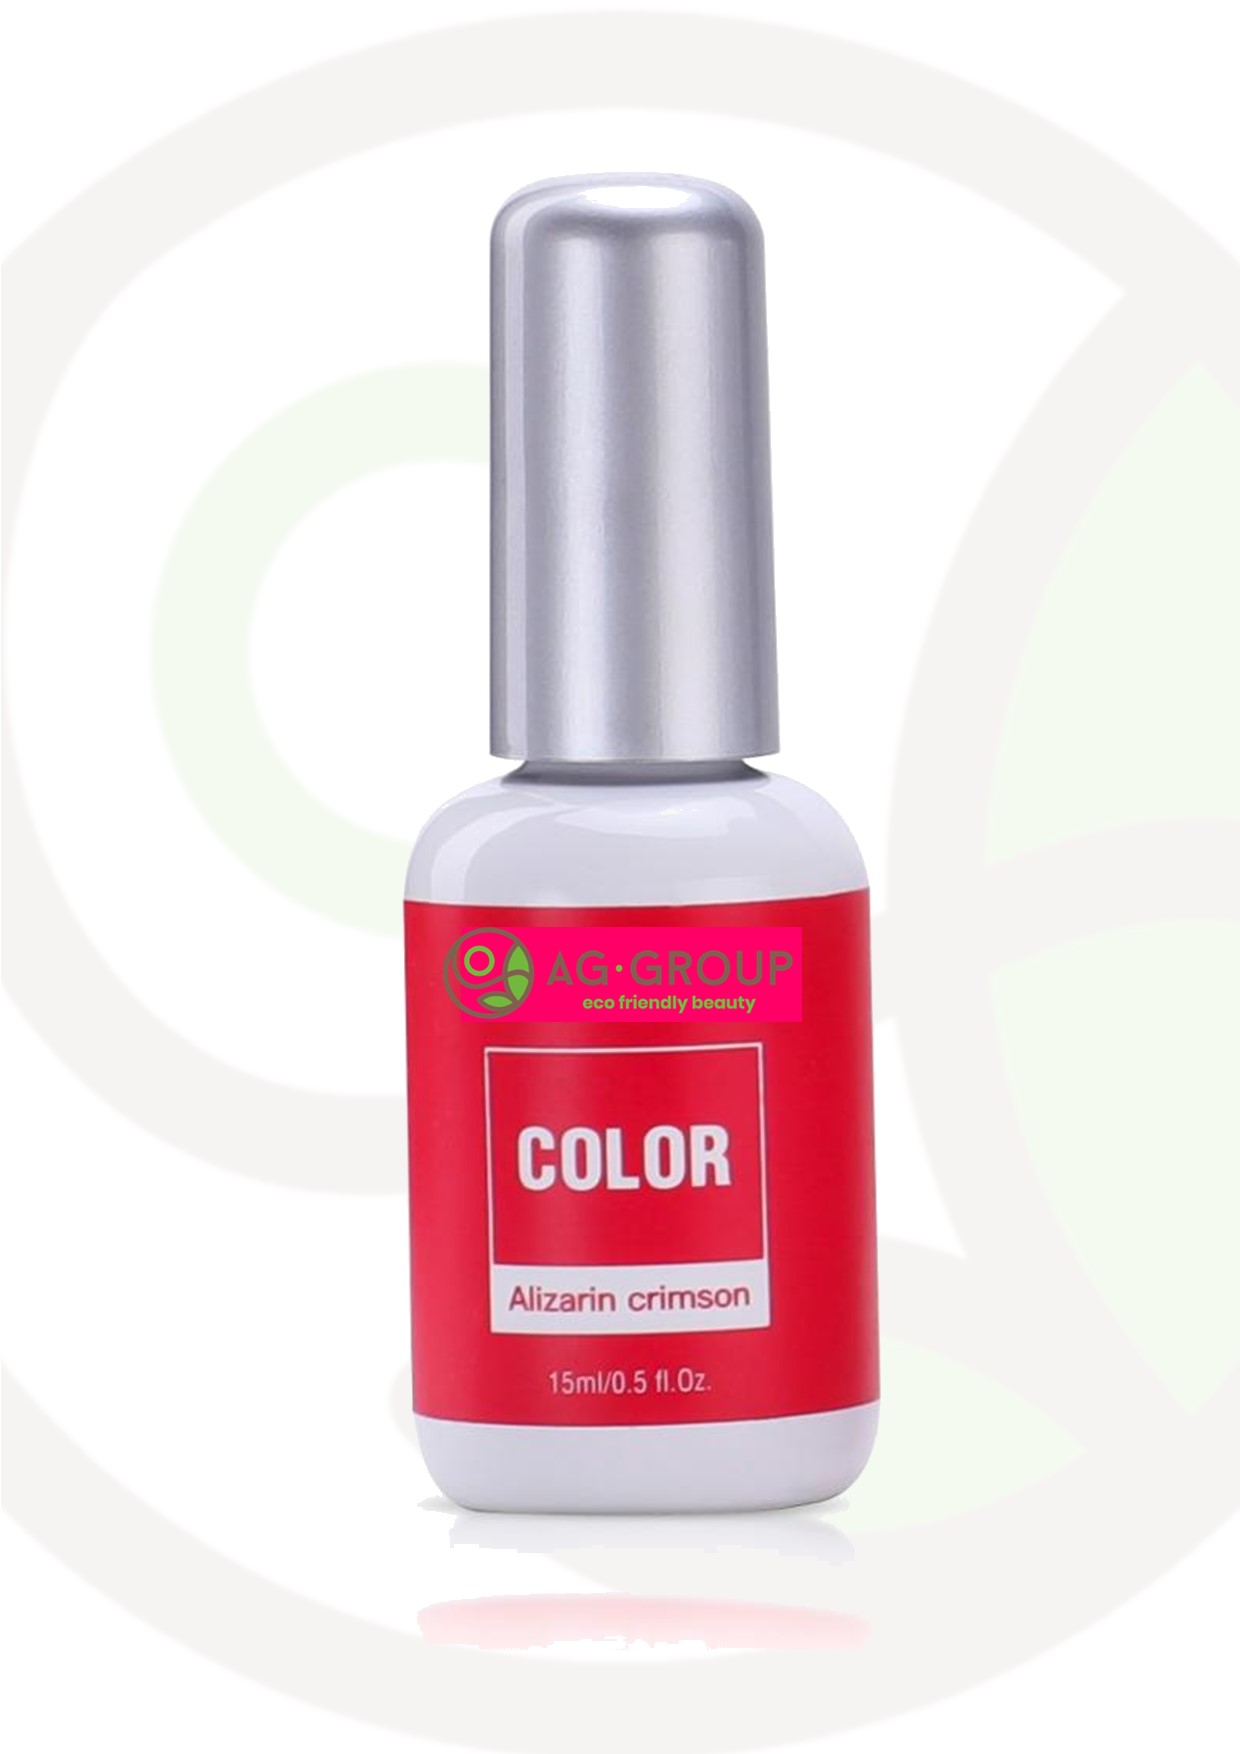 Featured image for “Gel polish soak -off led/uv- color alizarin crimson”